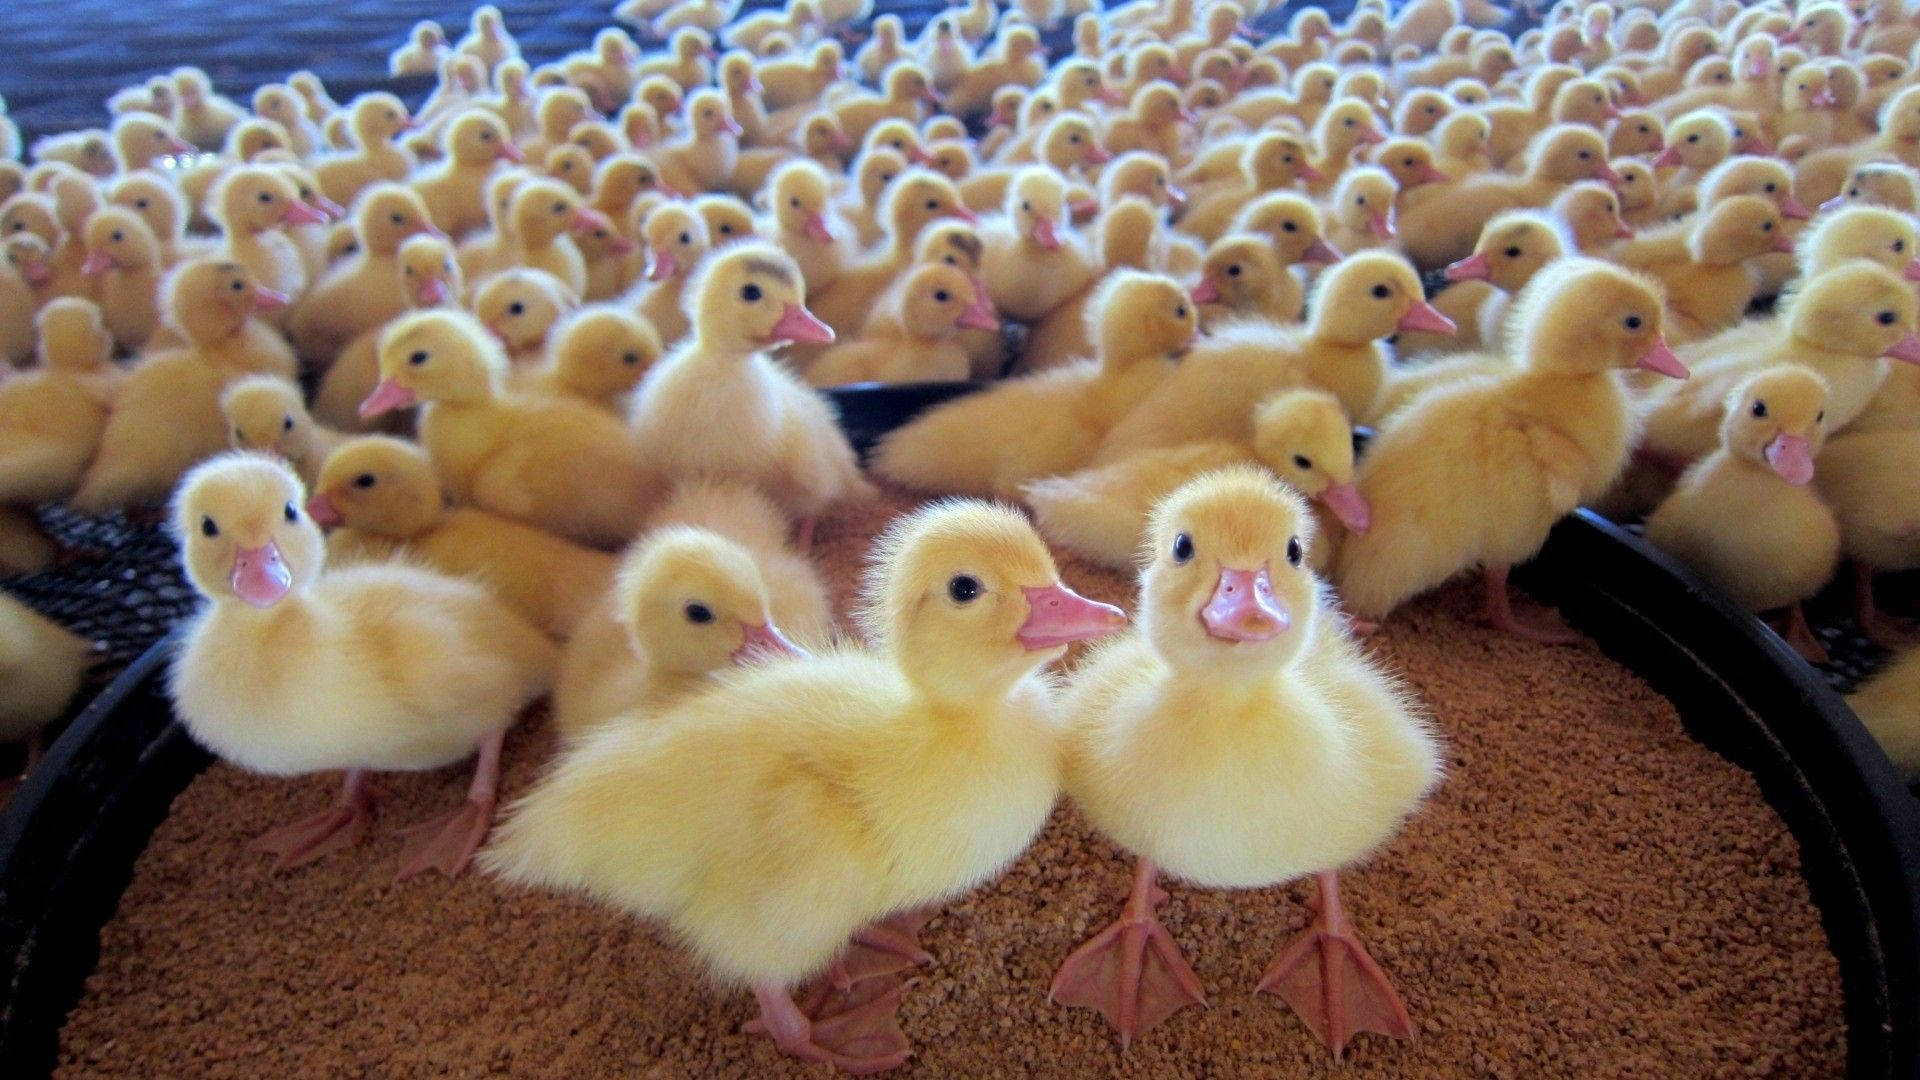 Crowded Baby Ducks